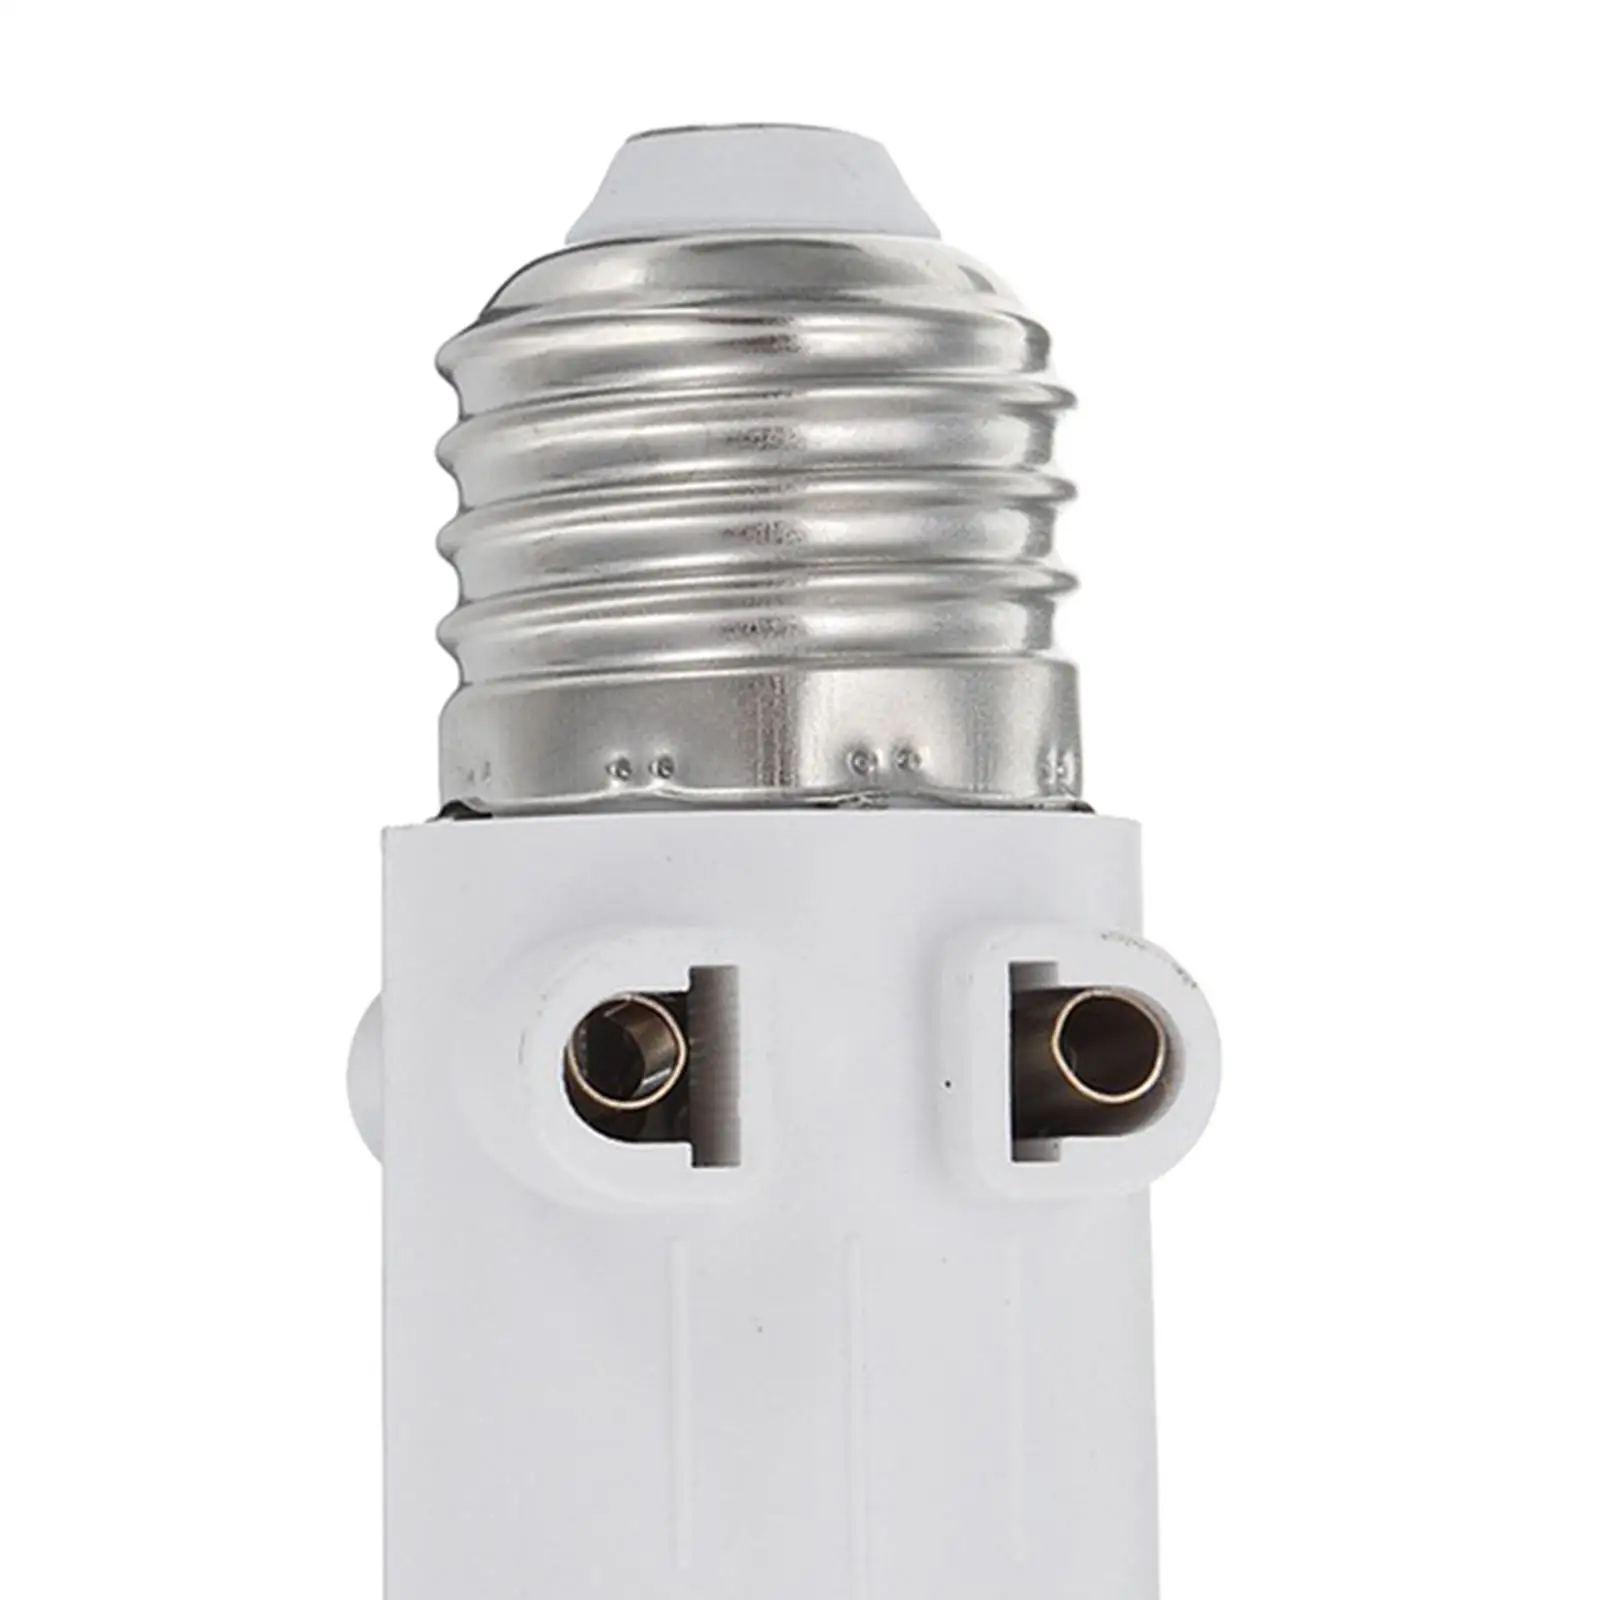 1pc E27 Socket Light Bulb Lamp Base Connector Holder Adapter Plug Converter Fireproof EU Plug Connector Bulb Adapter